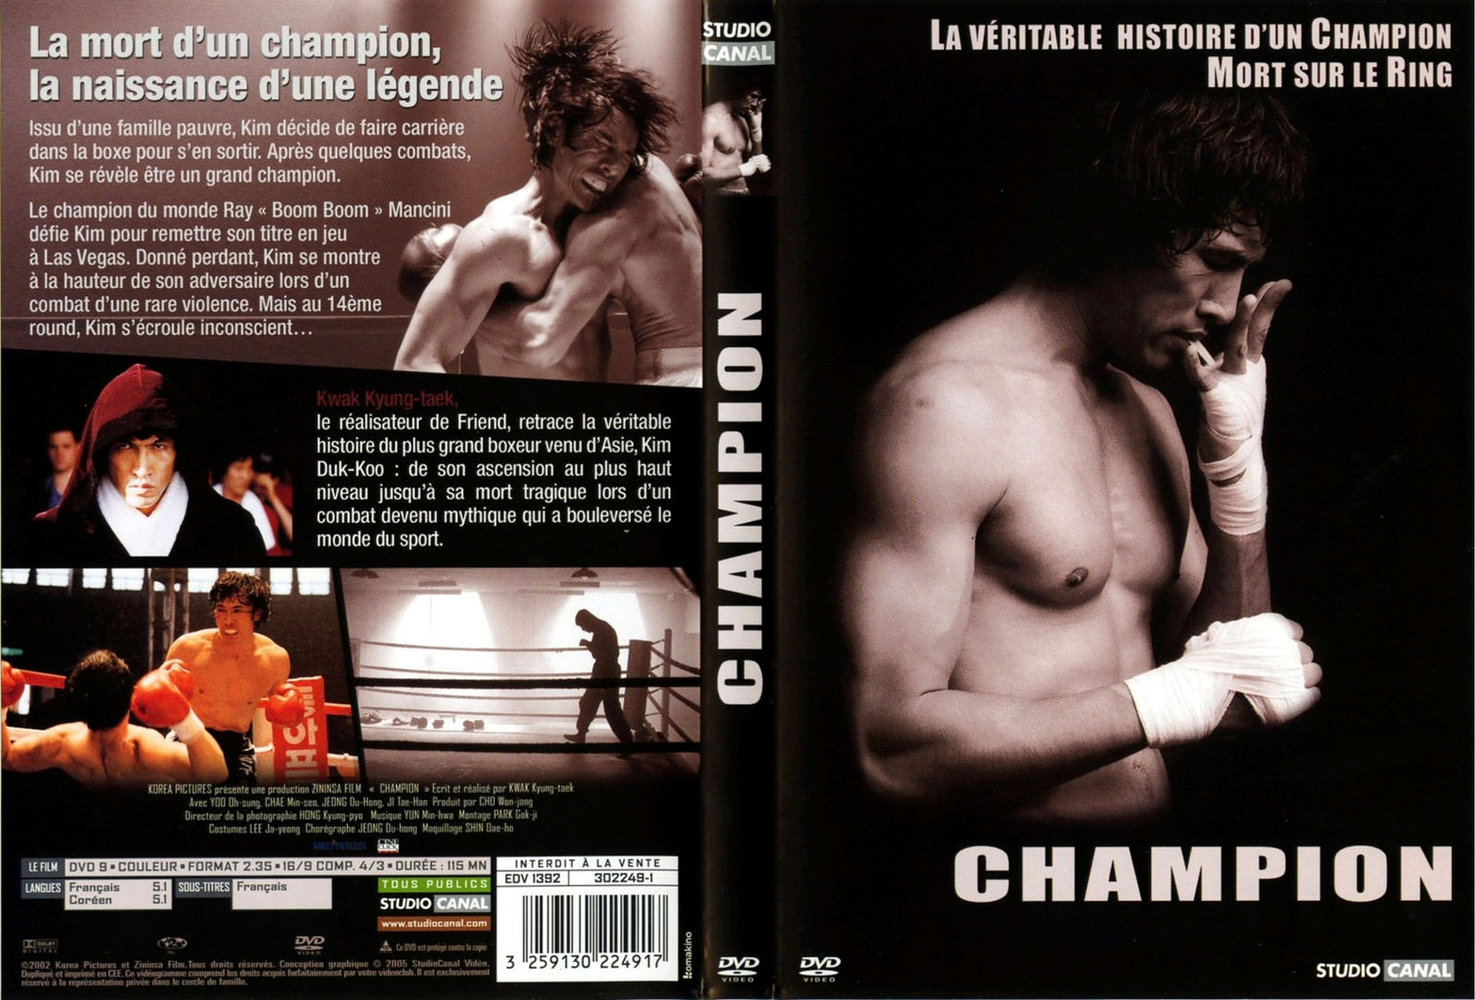 Jaquette DVD Champion